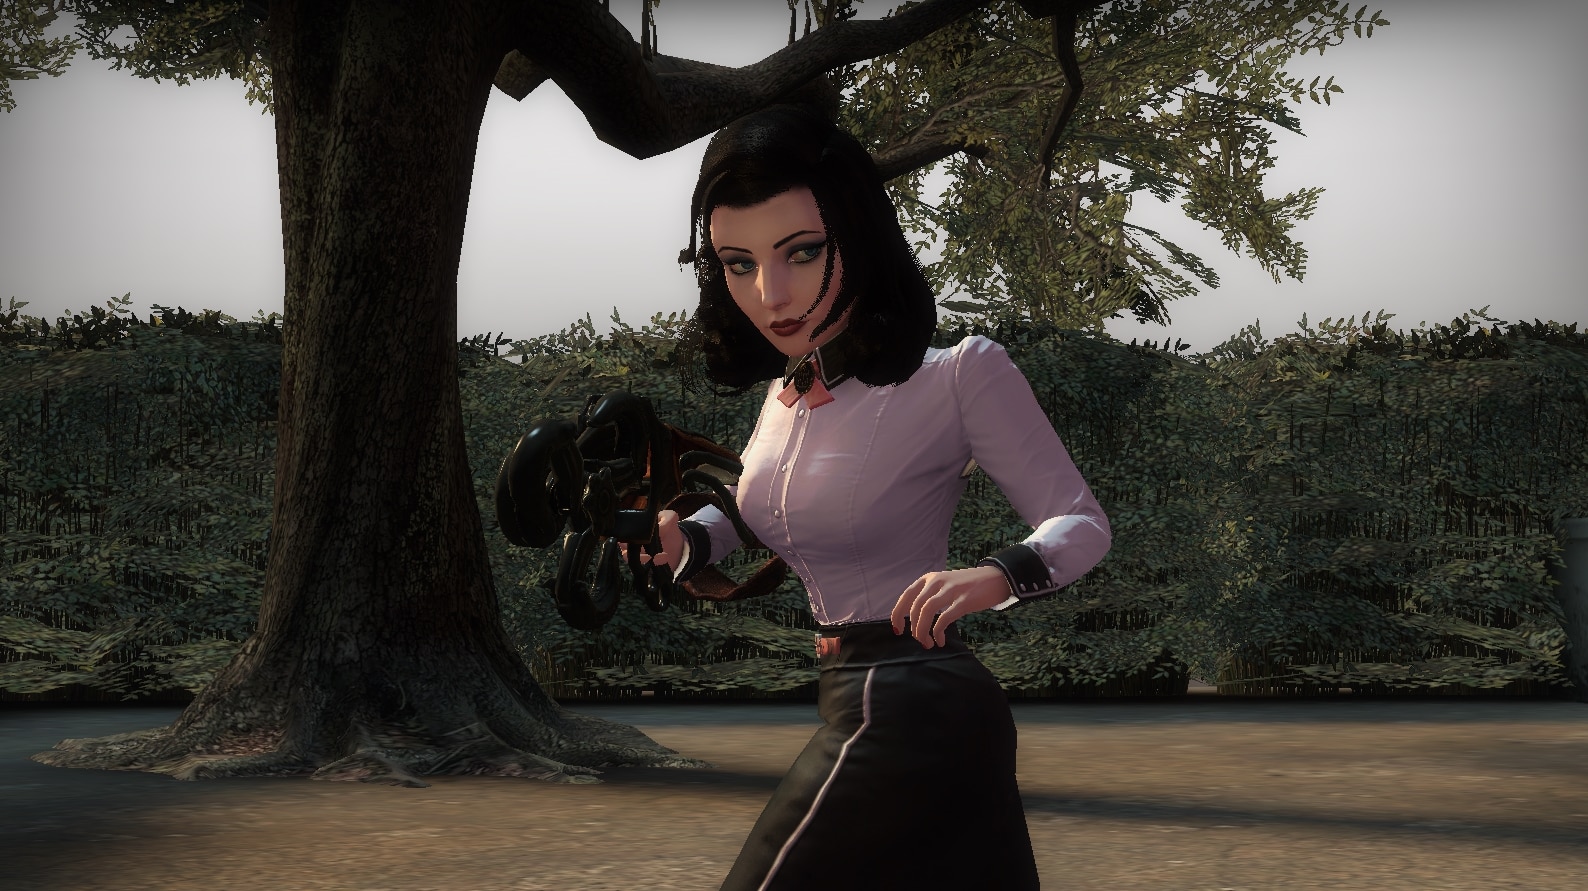 Elizabeth from Bioshock Infinite holding a Sky-Hook in Source engine